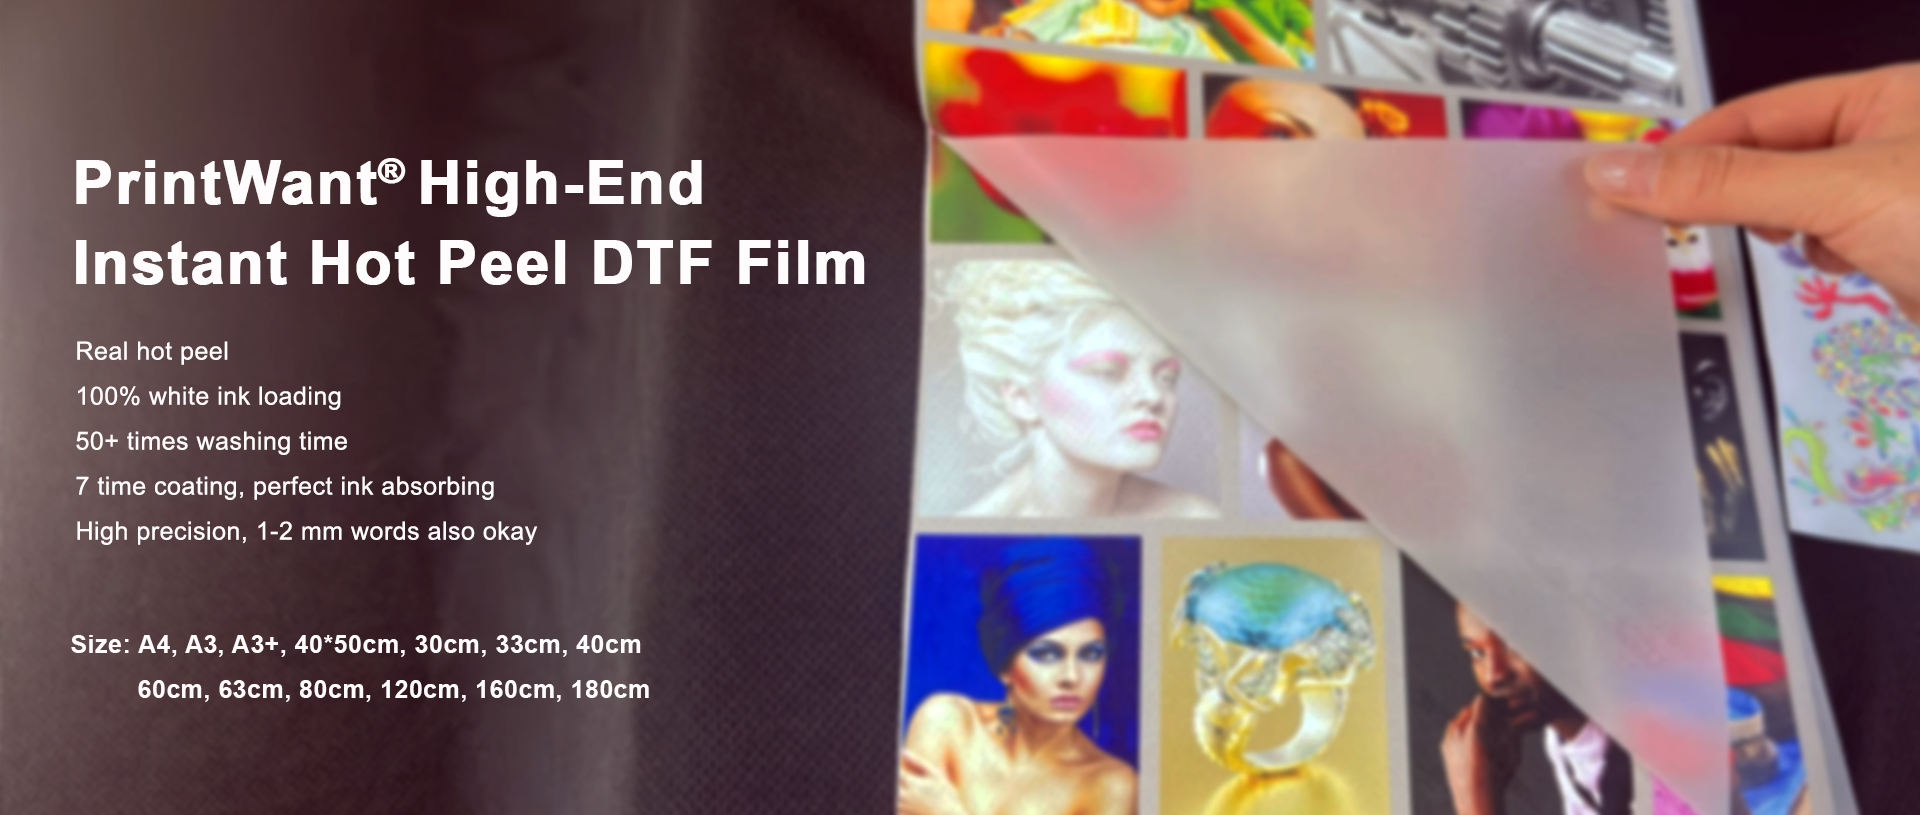 PrintWant の DTF Pet Film: 完璧なインスタント ホット ピール効果の業界モデル